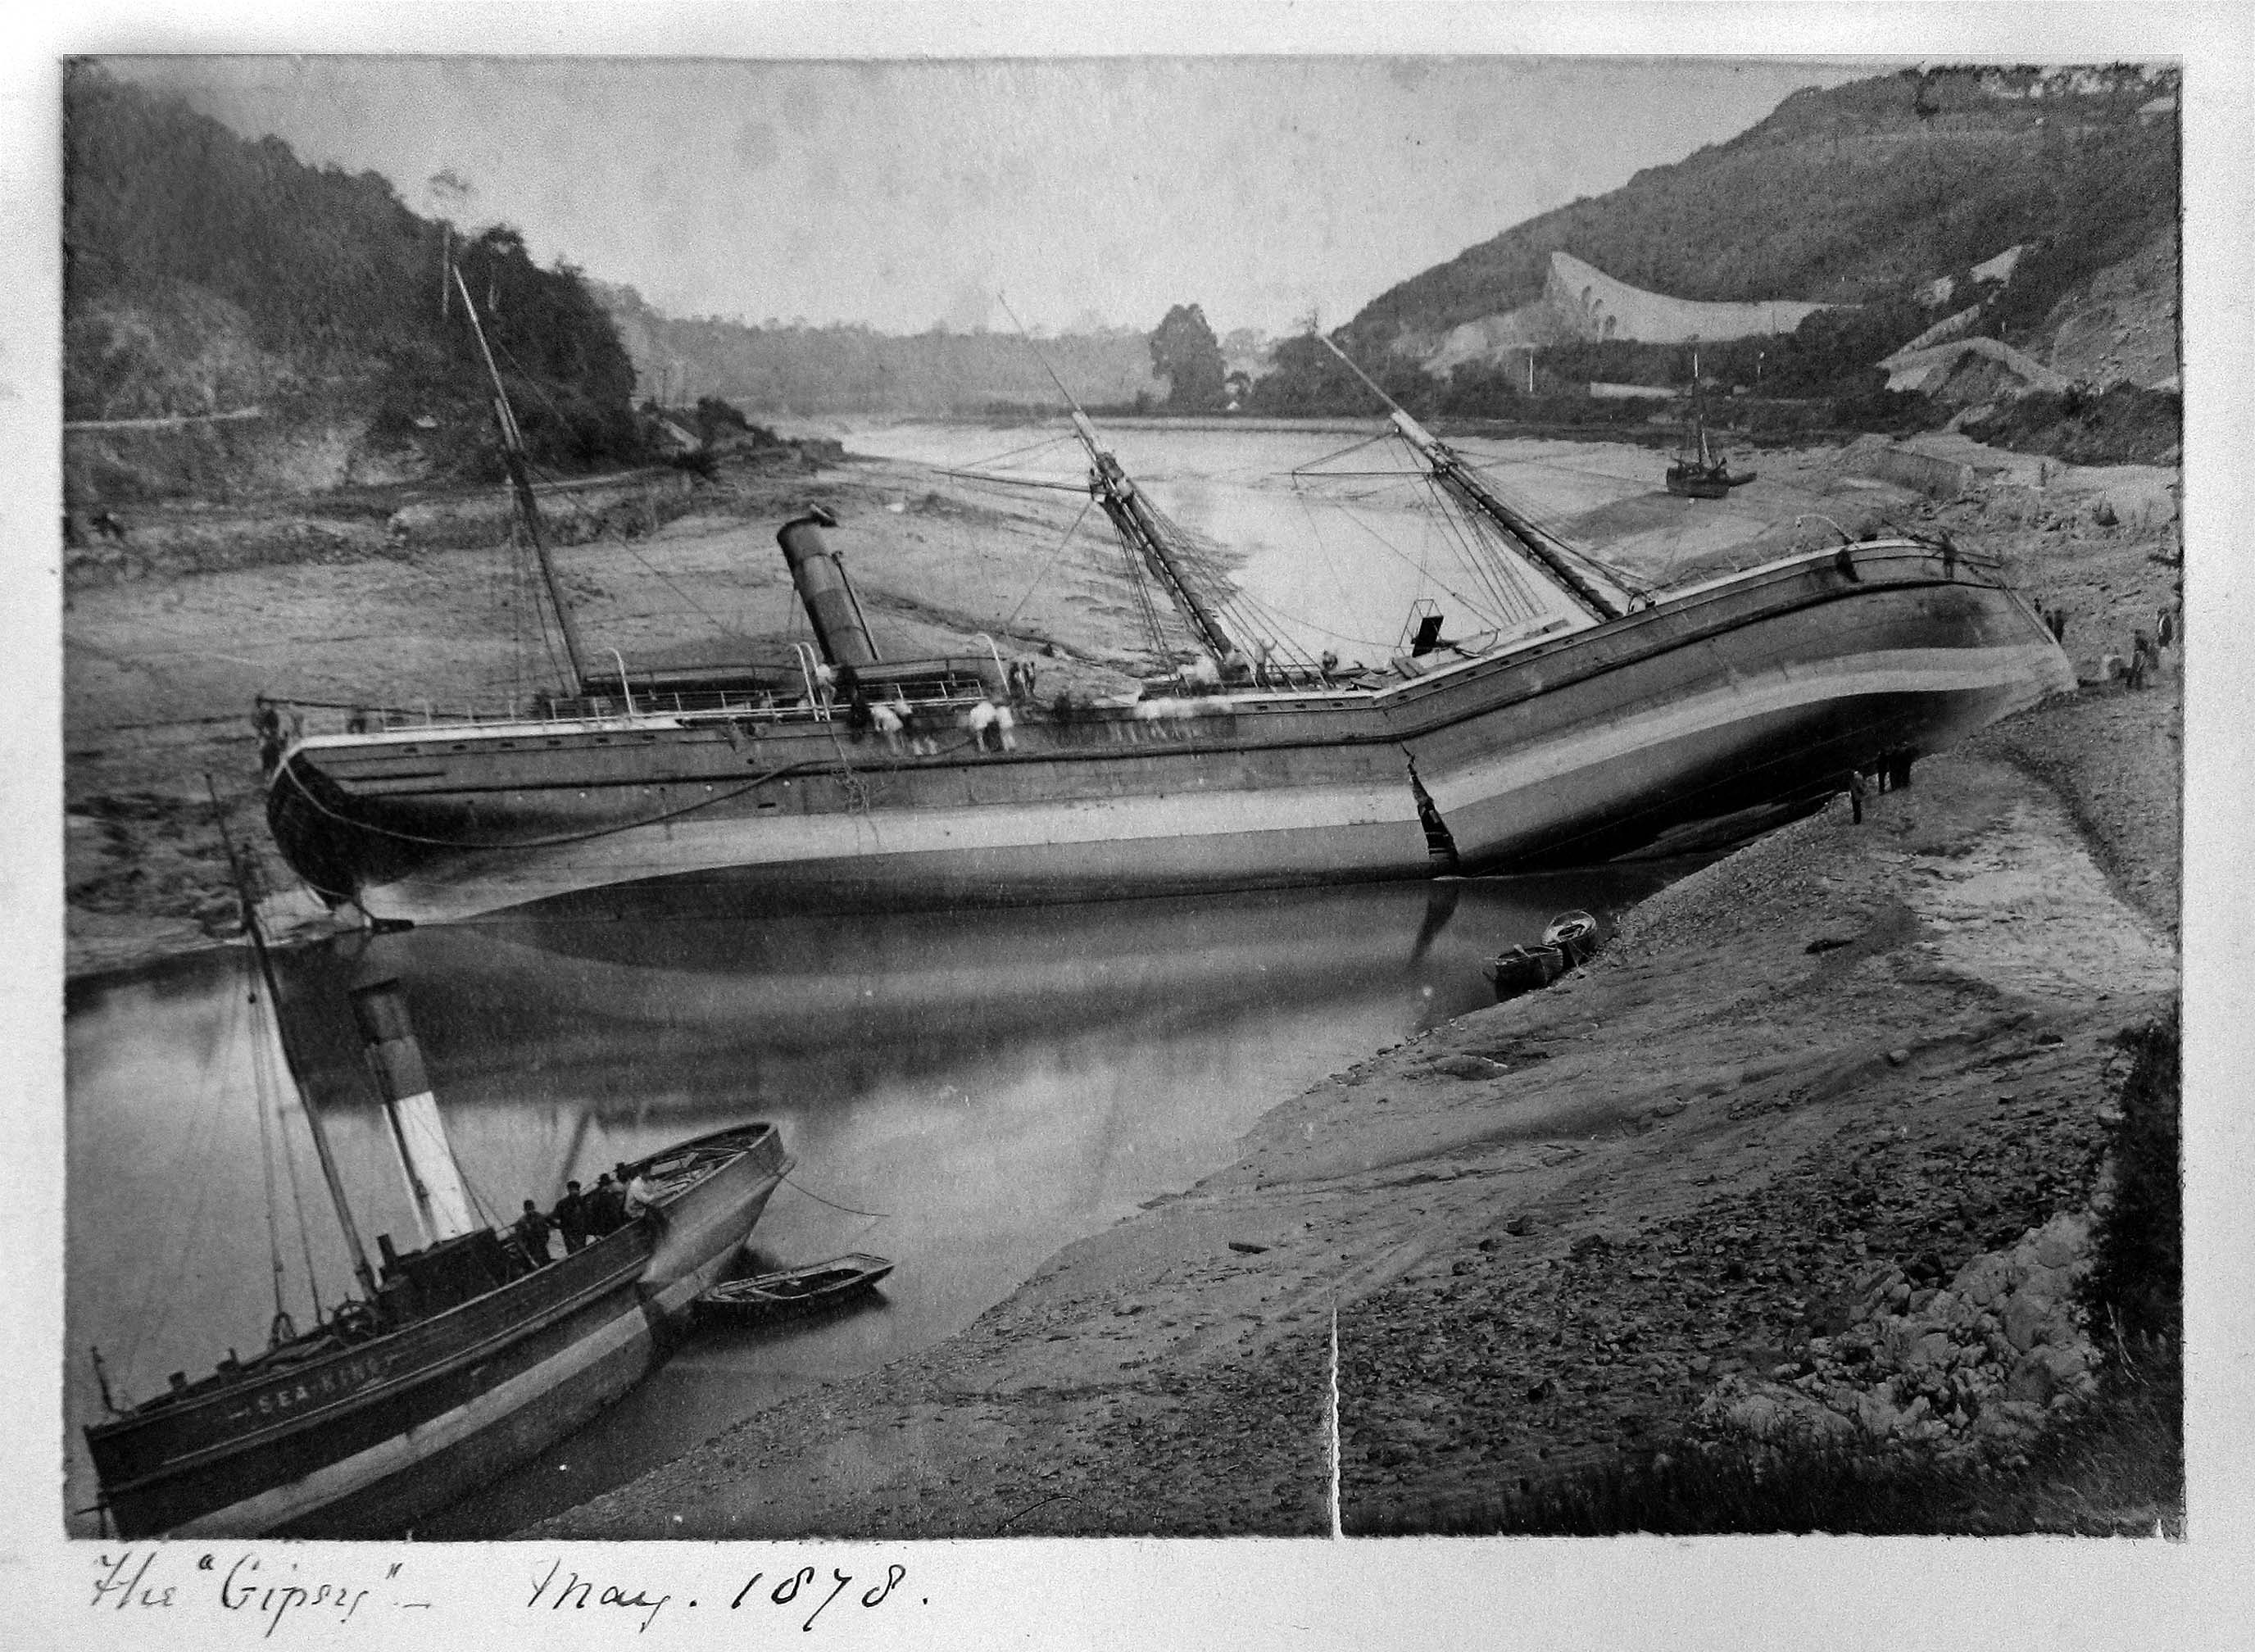 Wrecks On The River Avon - Bristol Radical History Group